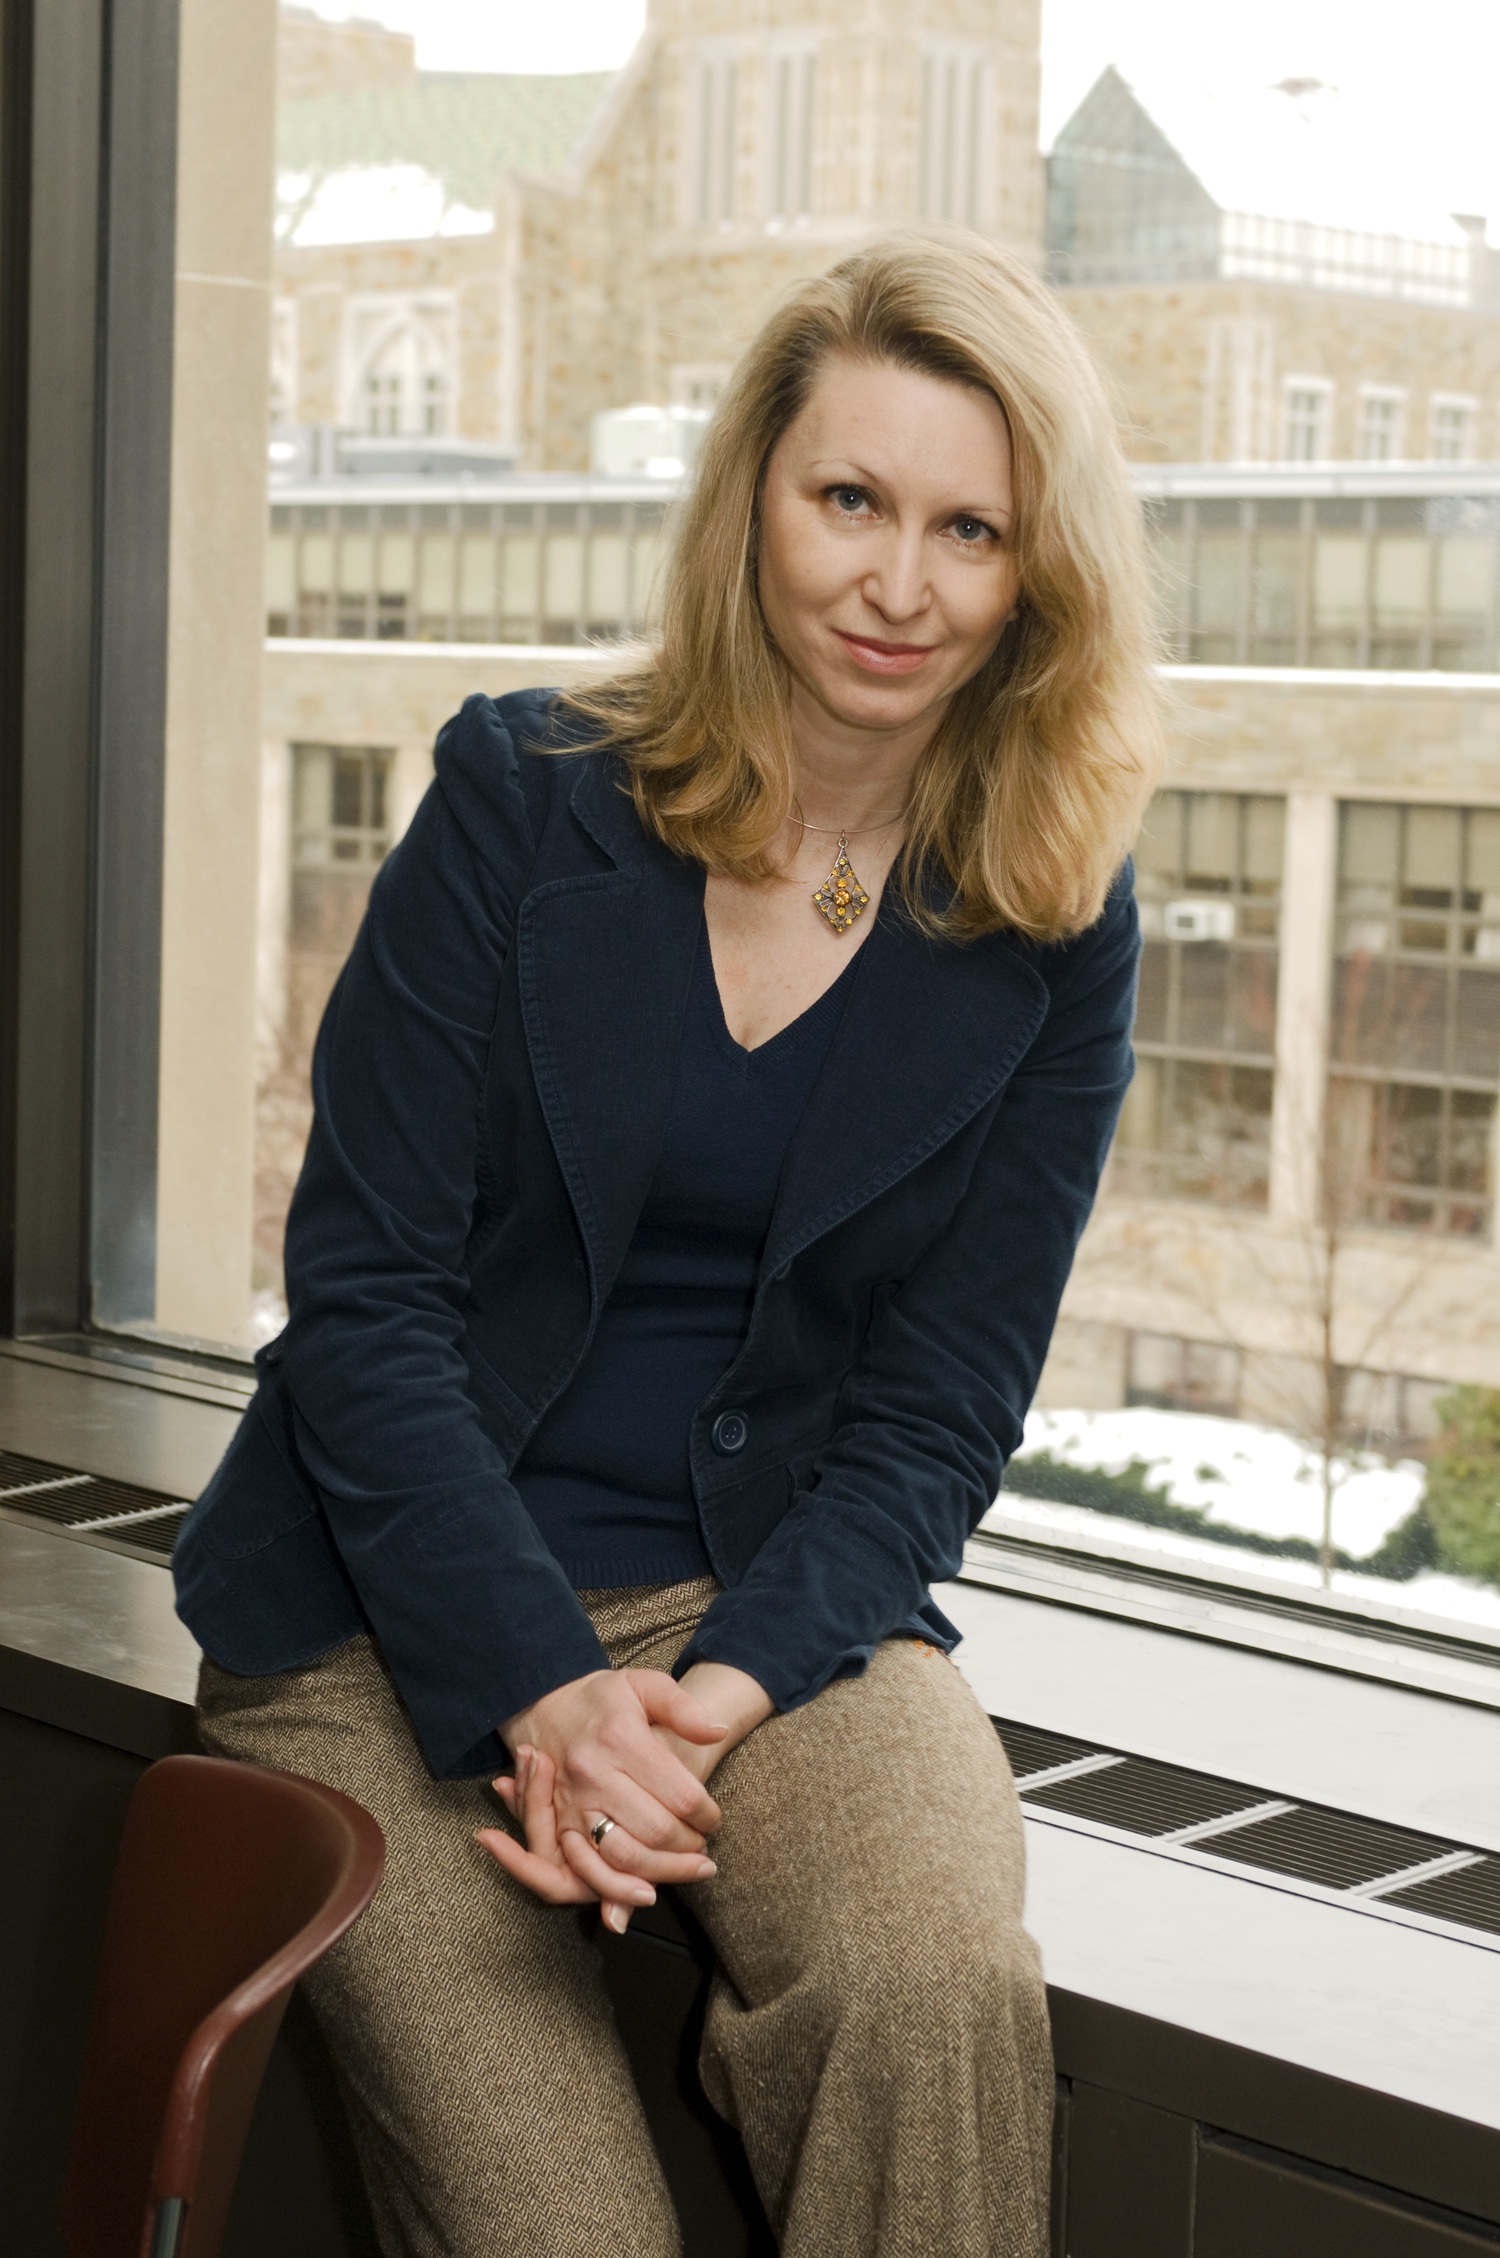 Dr. Petrovich in her office at Boston College. Photo Credit: Lee Pellegrini, Boston College.